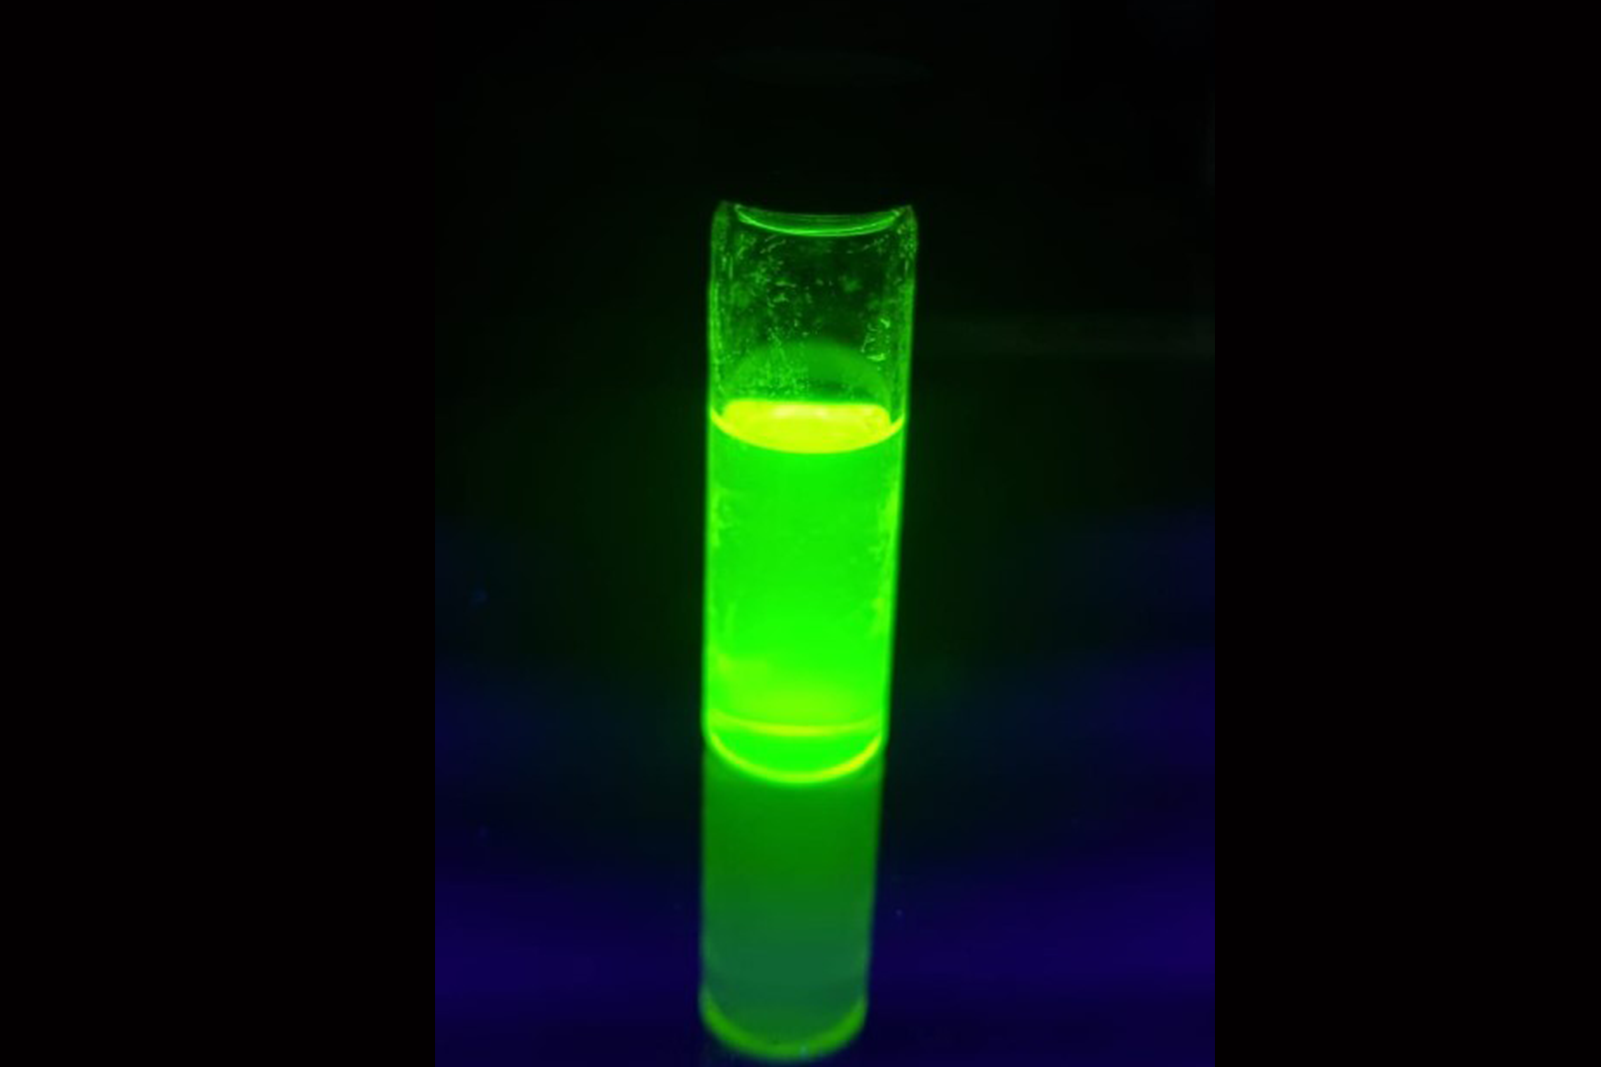 Bright Green CdSe Based Quantum Dots (Pure):